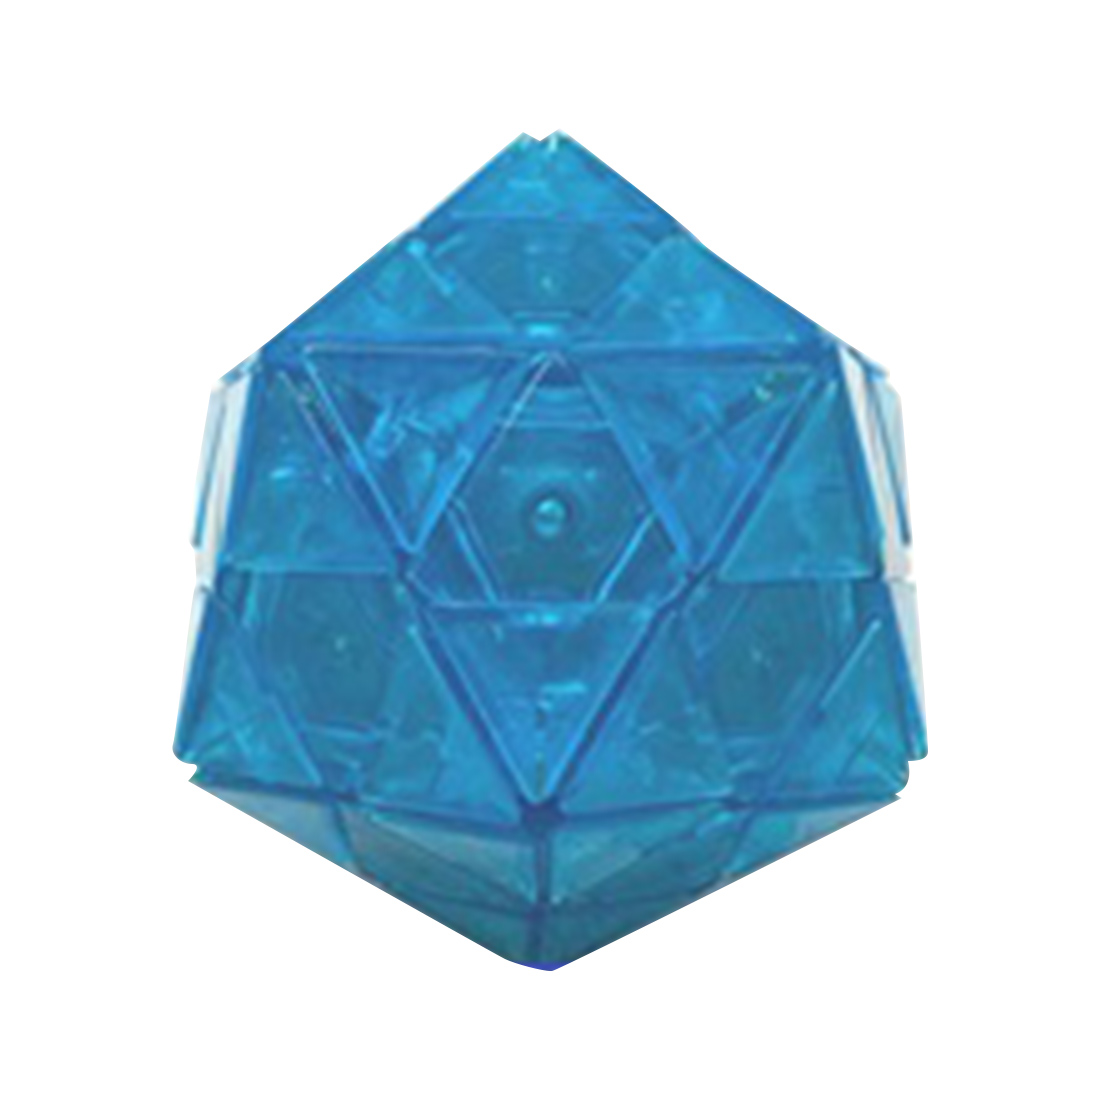 Calvin's Icosahedron Carousel Magic Cube (Ice Blue/Limited Edition)